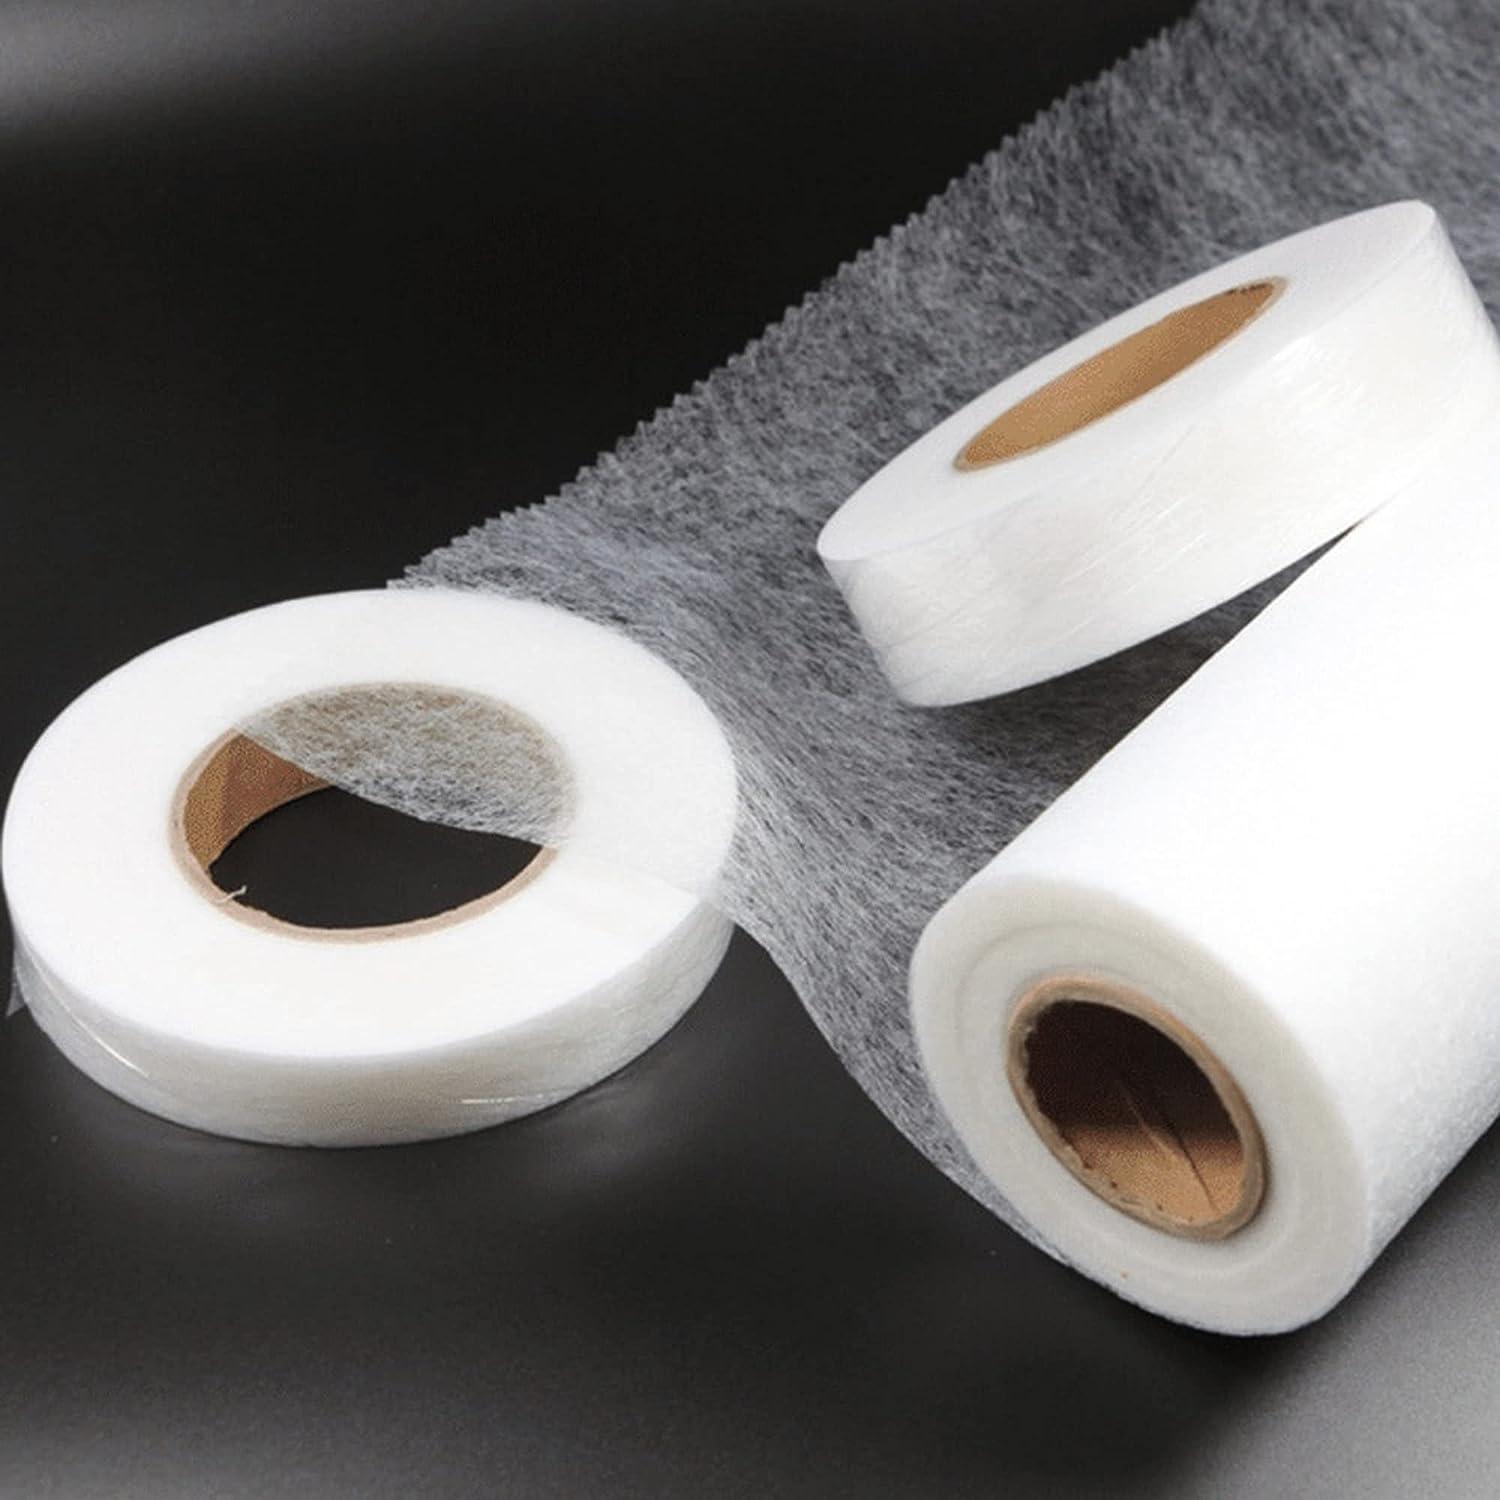  Iron-on Hem Clothing Tape 2 Rolls Adhesive Hem Tape 1